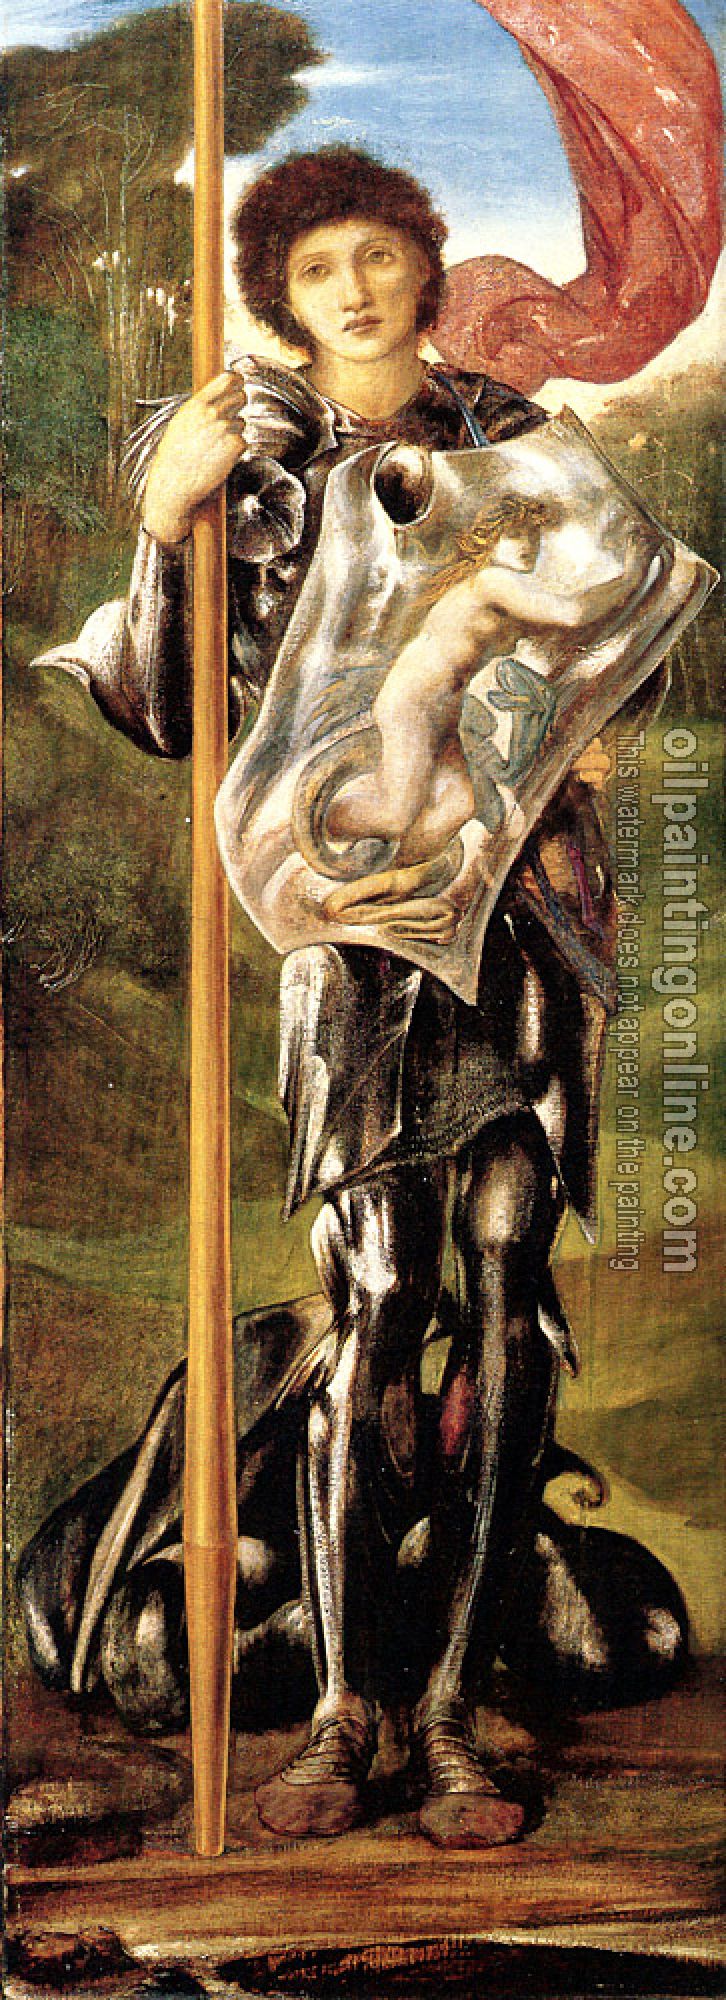 Burne-Jones, Sir Edward Coley - Saint George